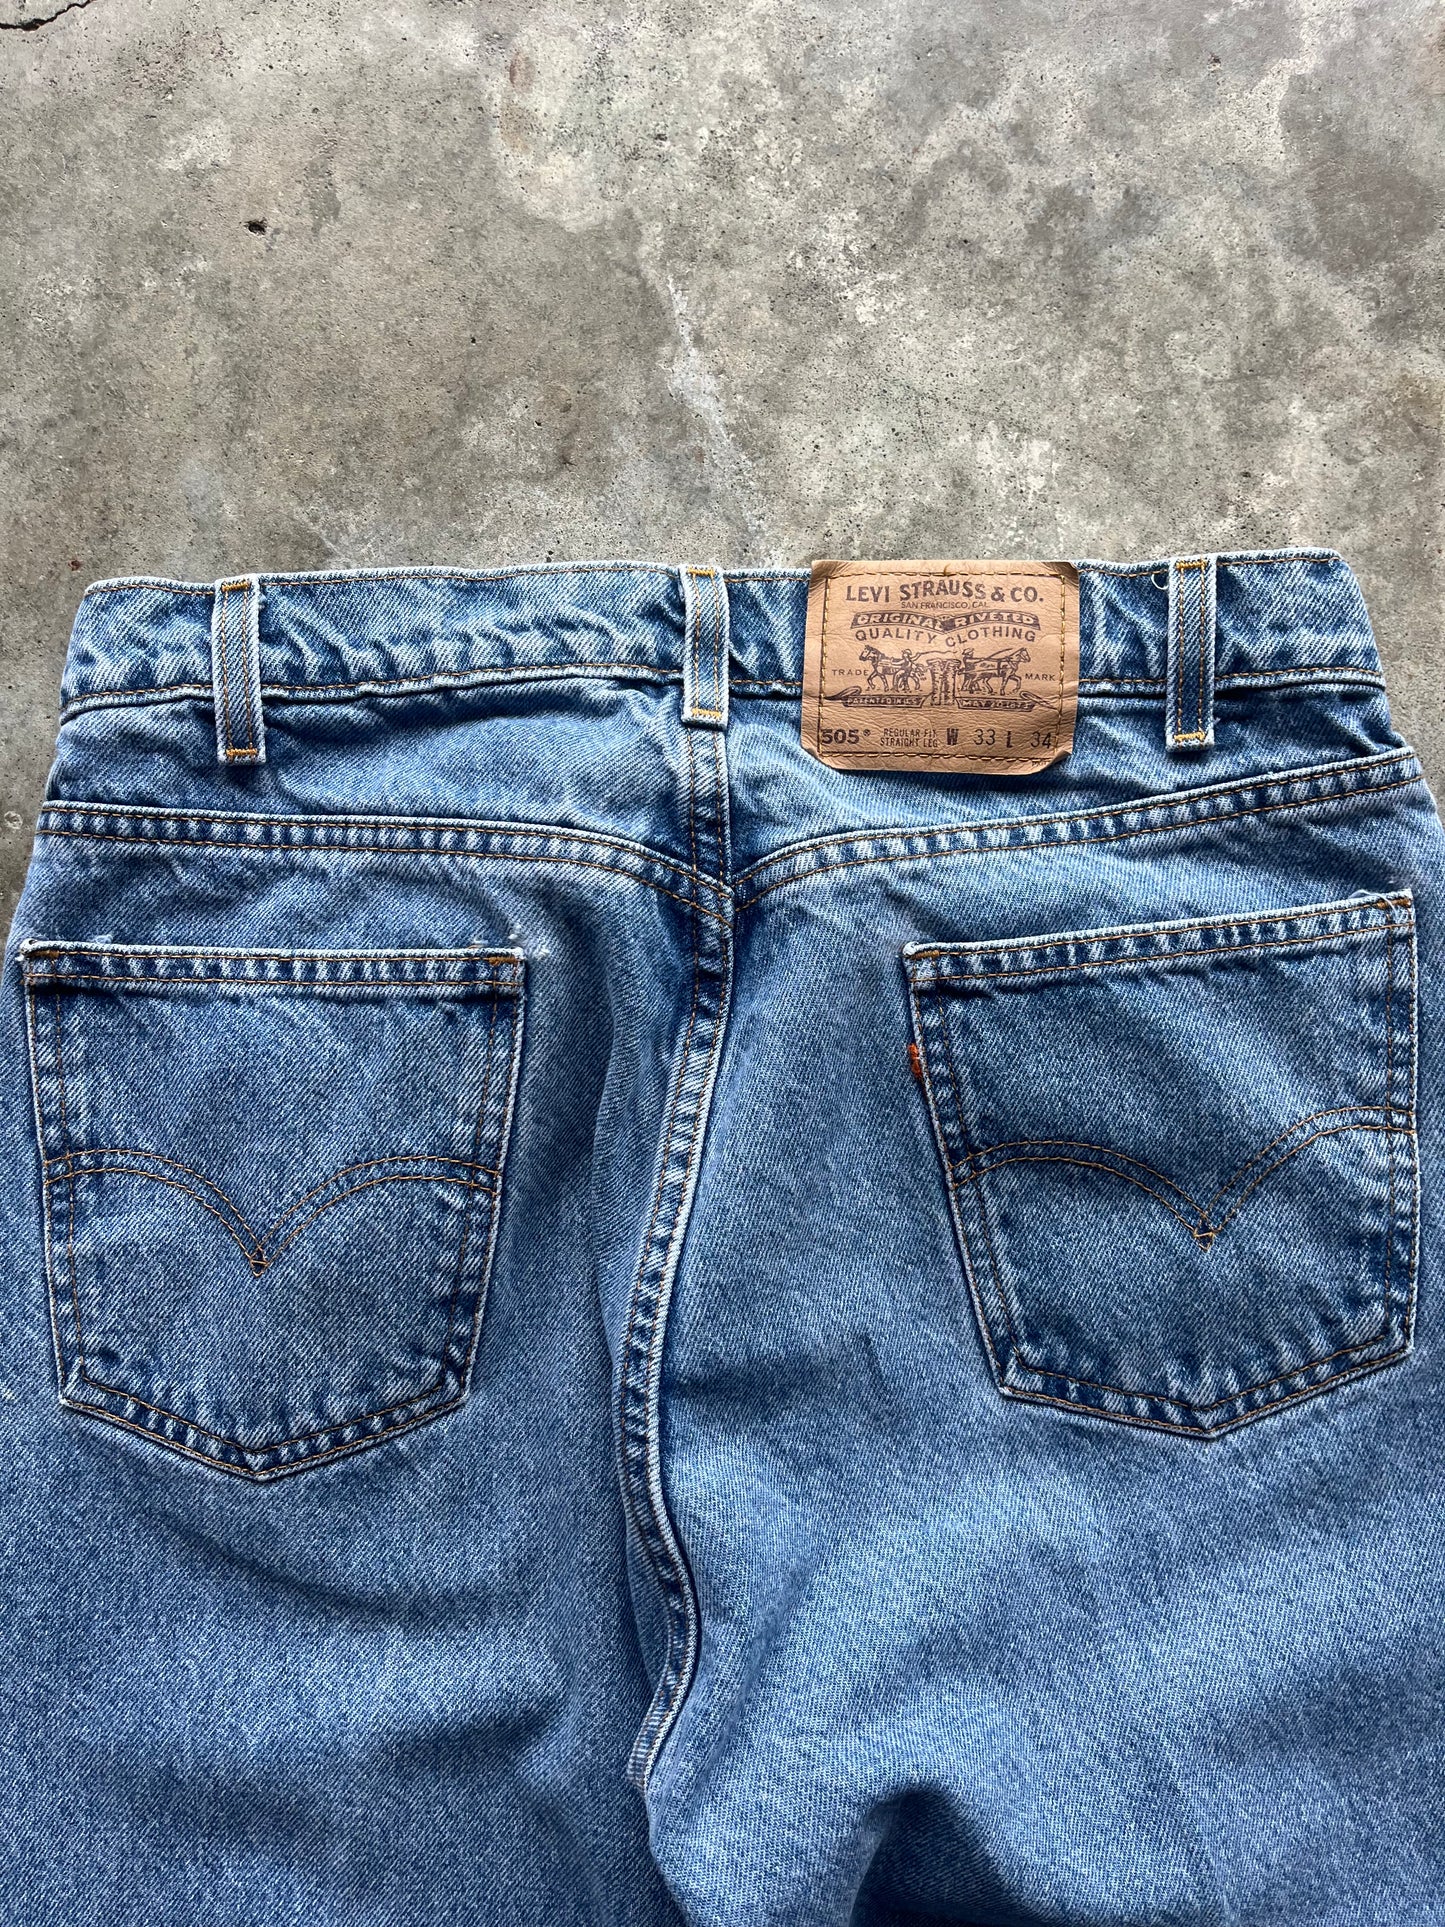 (33 x 34) Levi Orange Tab Jeans